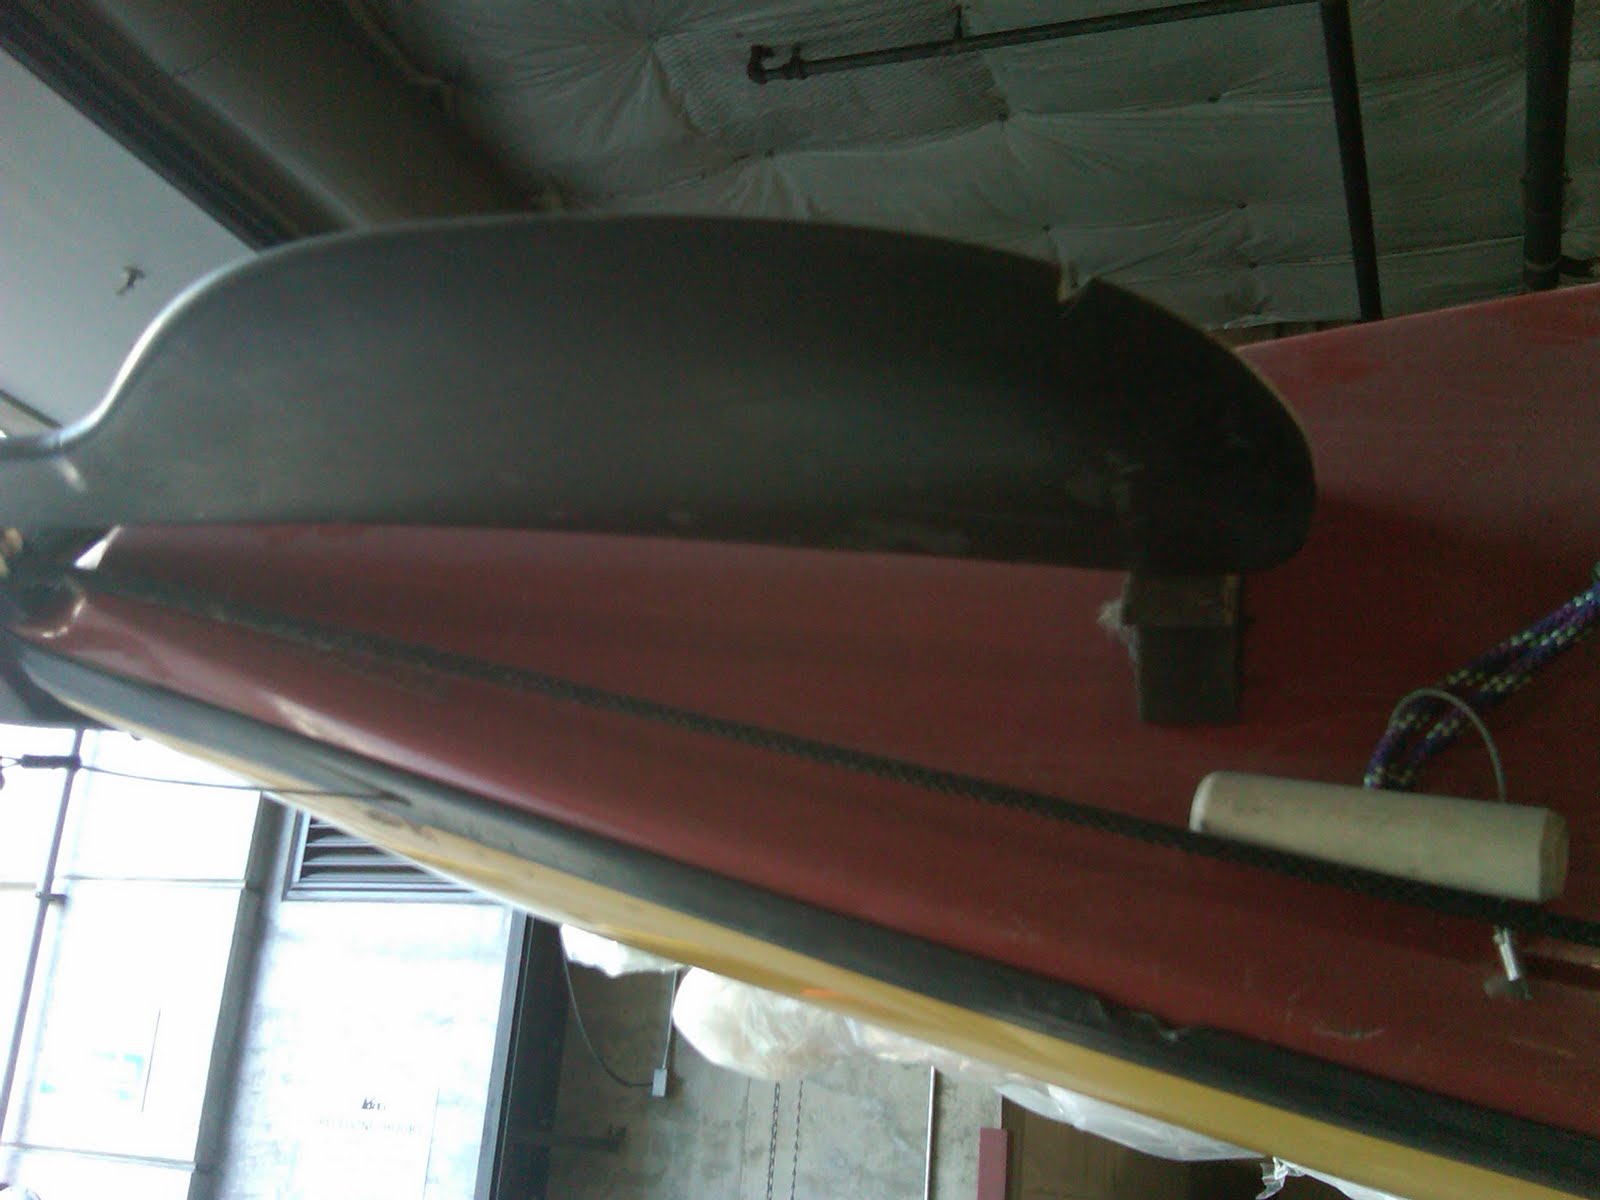 Veronica: Blog Used wooden kayaks for sale on craigslist